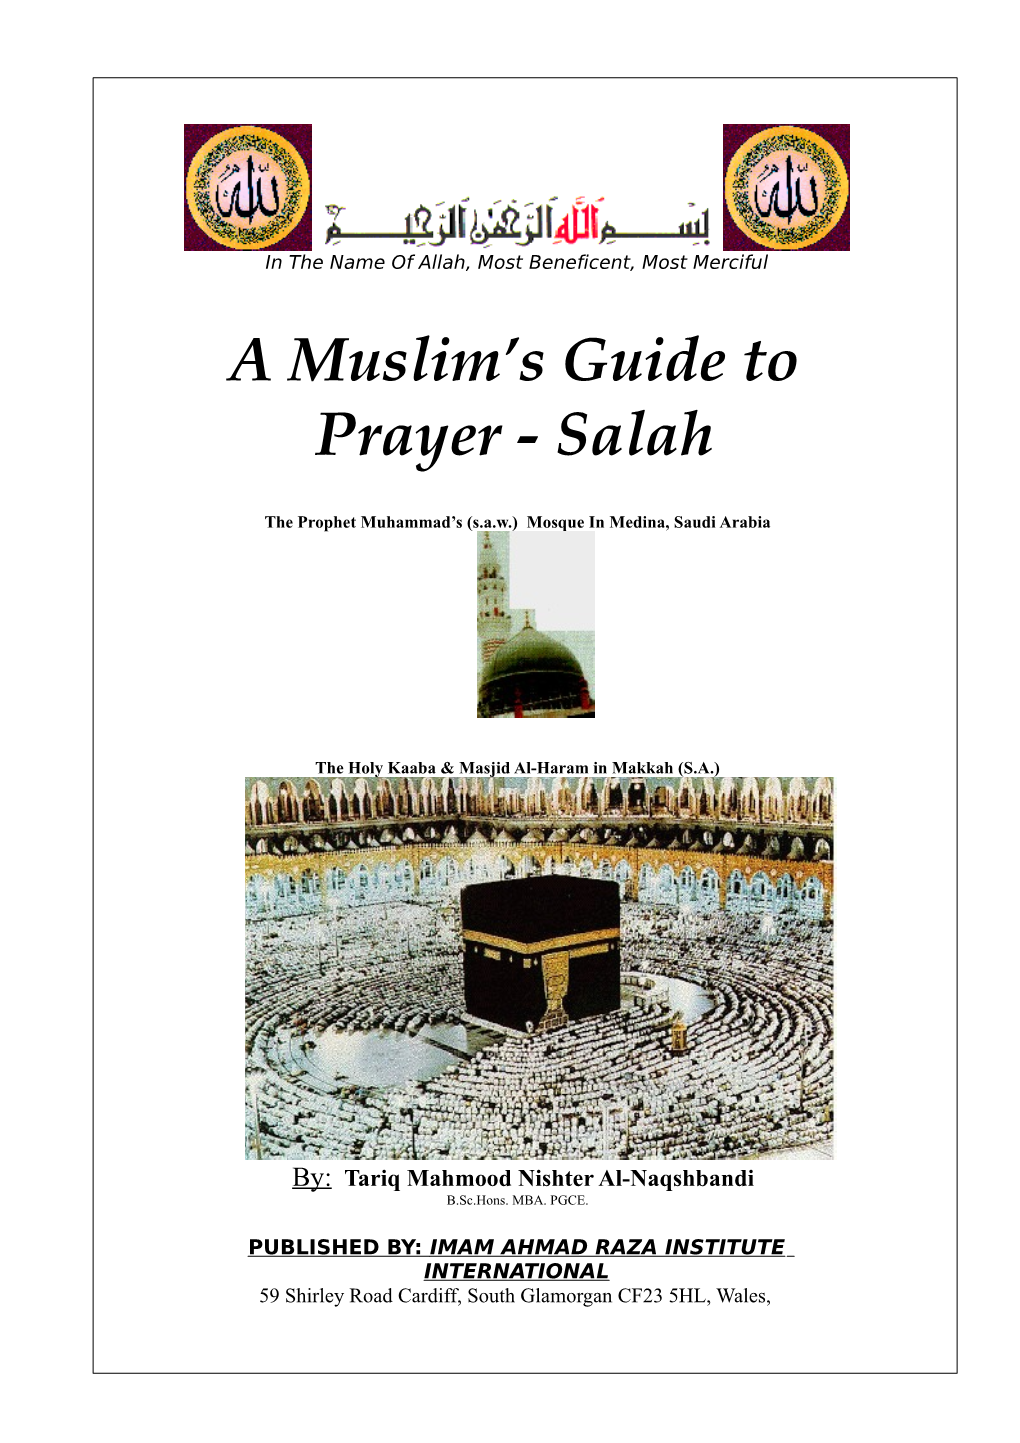 A Muslim's Guide to Prayer